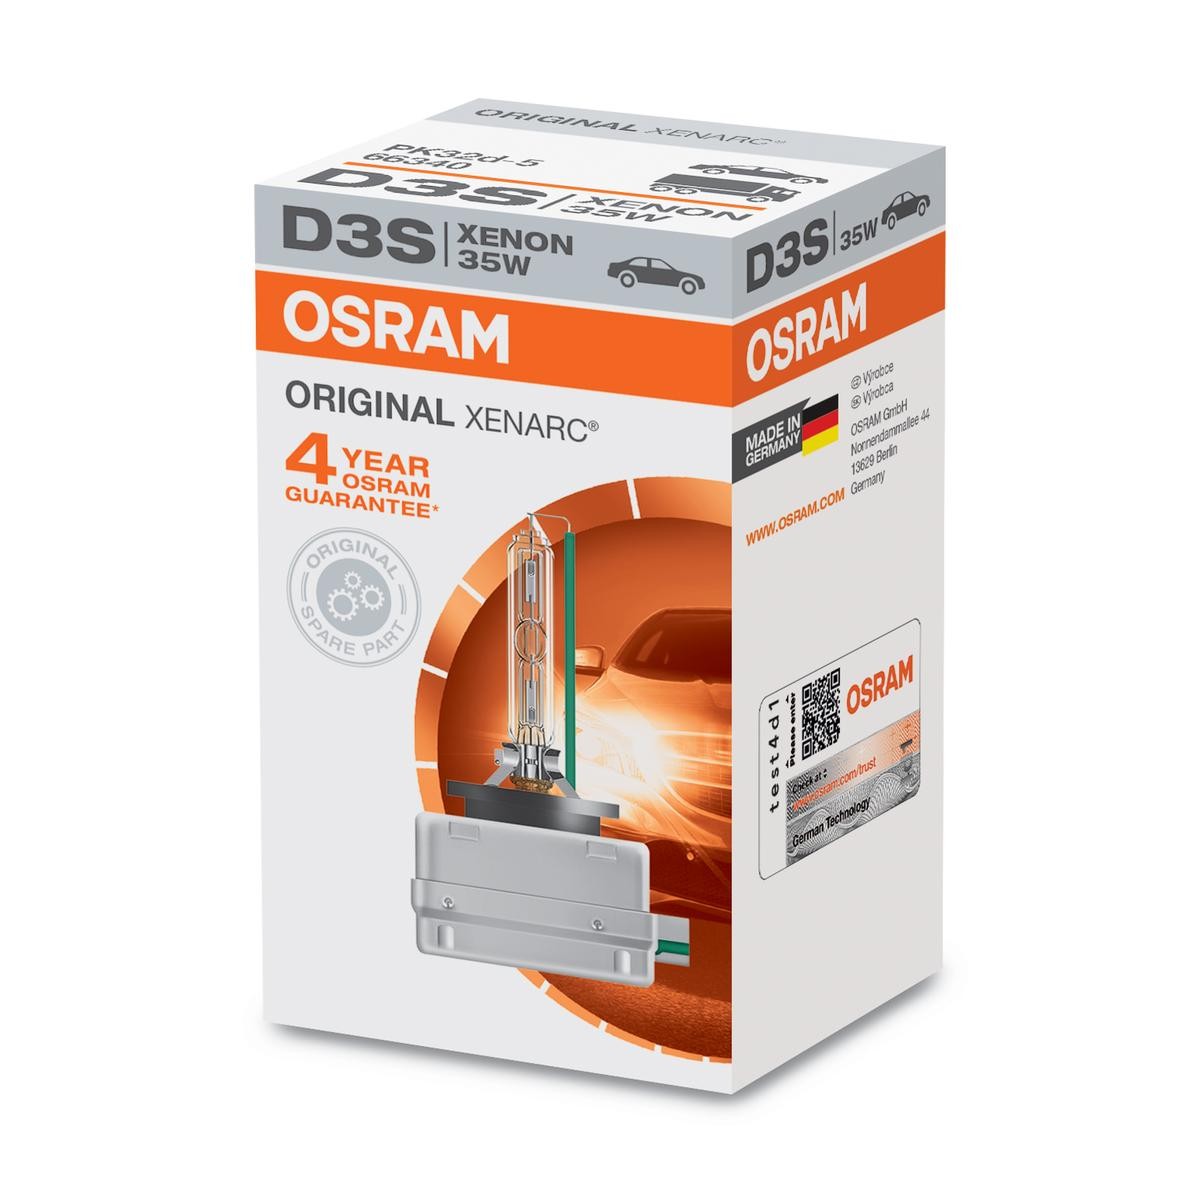 D3S OSRAM XENARC ORIGINAL D3S 42V 35W 4100K Xenon Gloeilamp grootlicht 66340 koop goedkoop